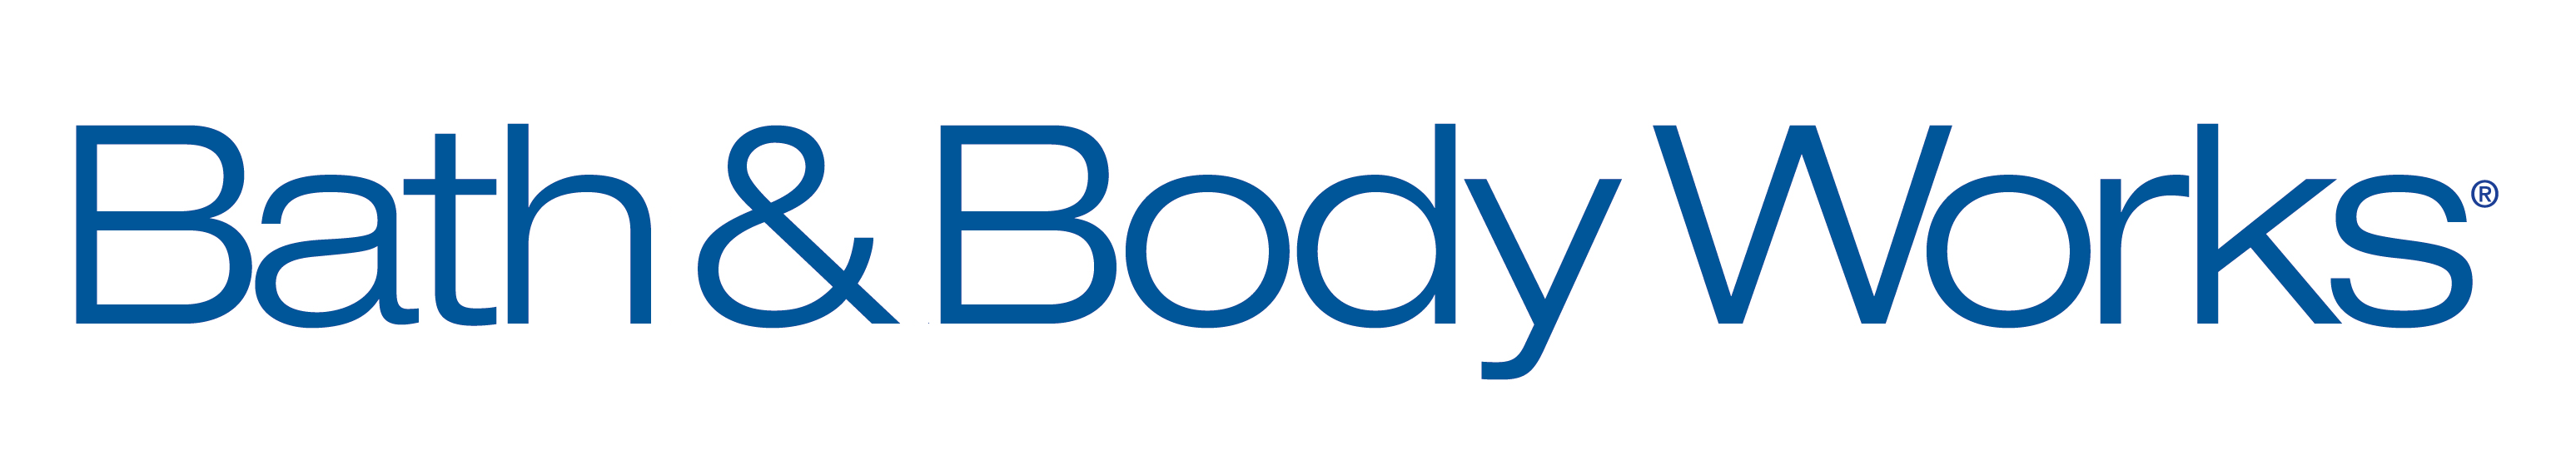 Bath and Body Works Logo - Bath & Body Works – Logos Download